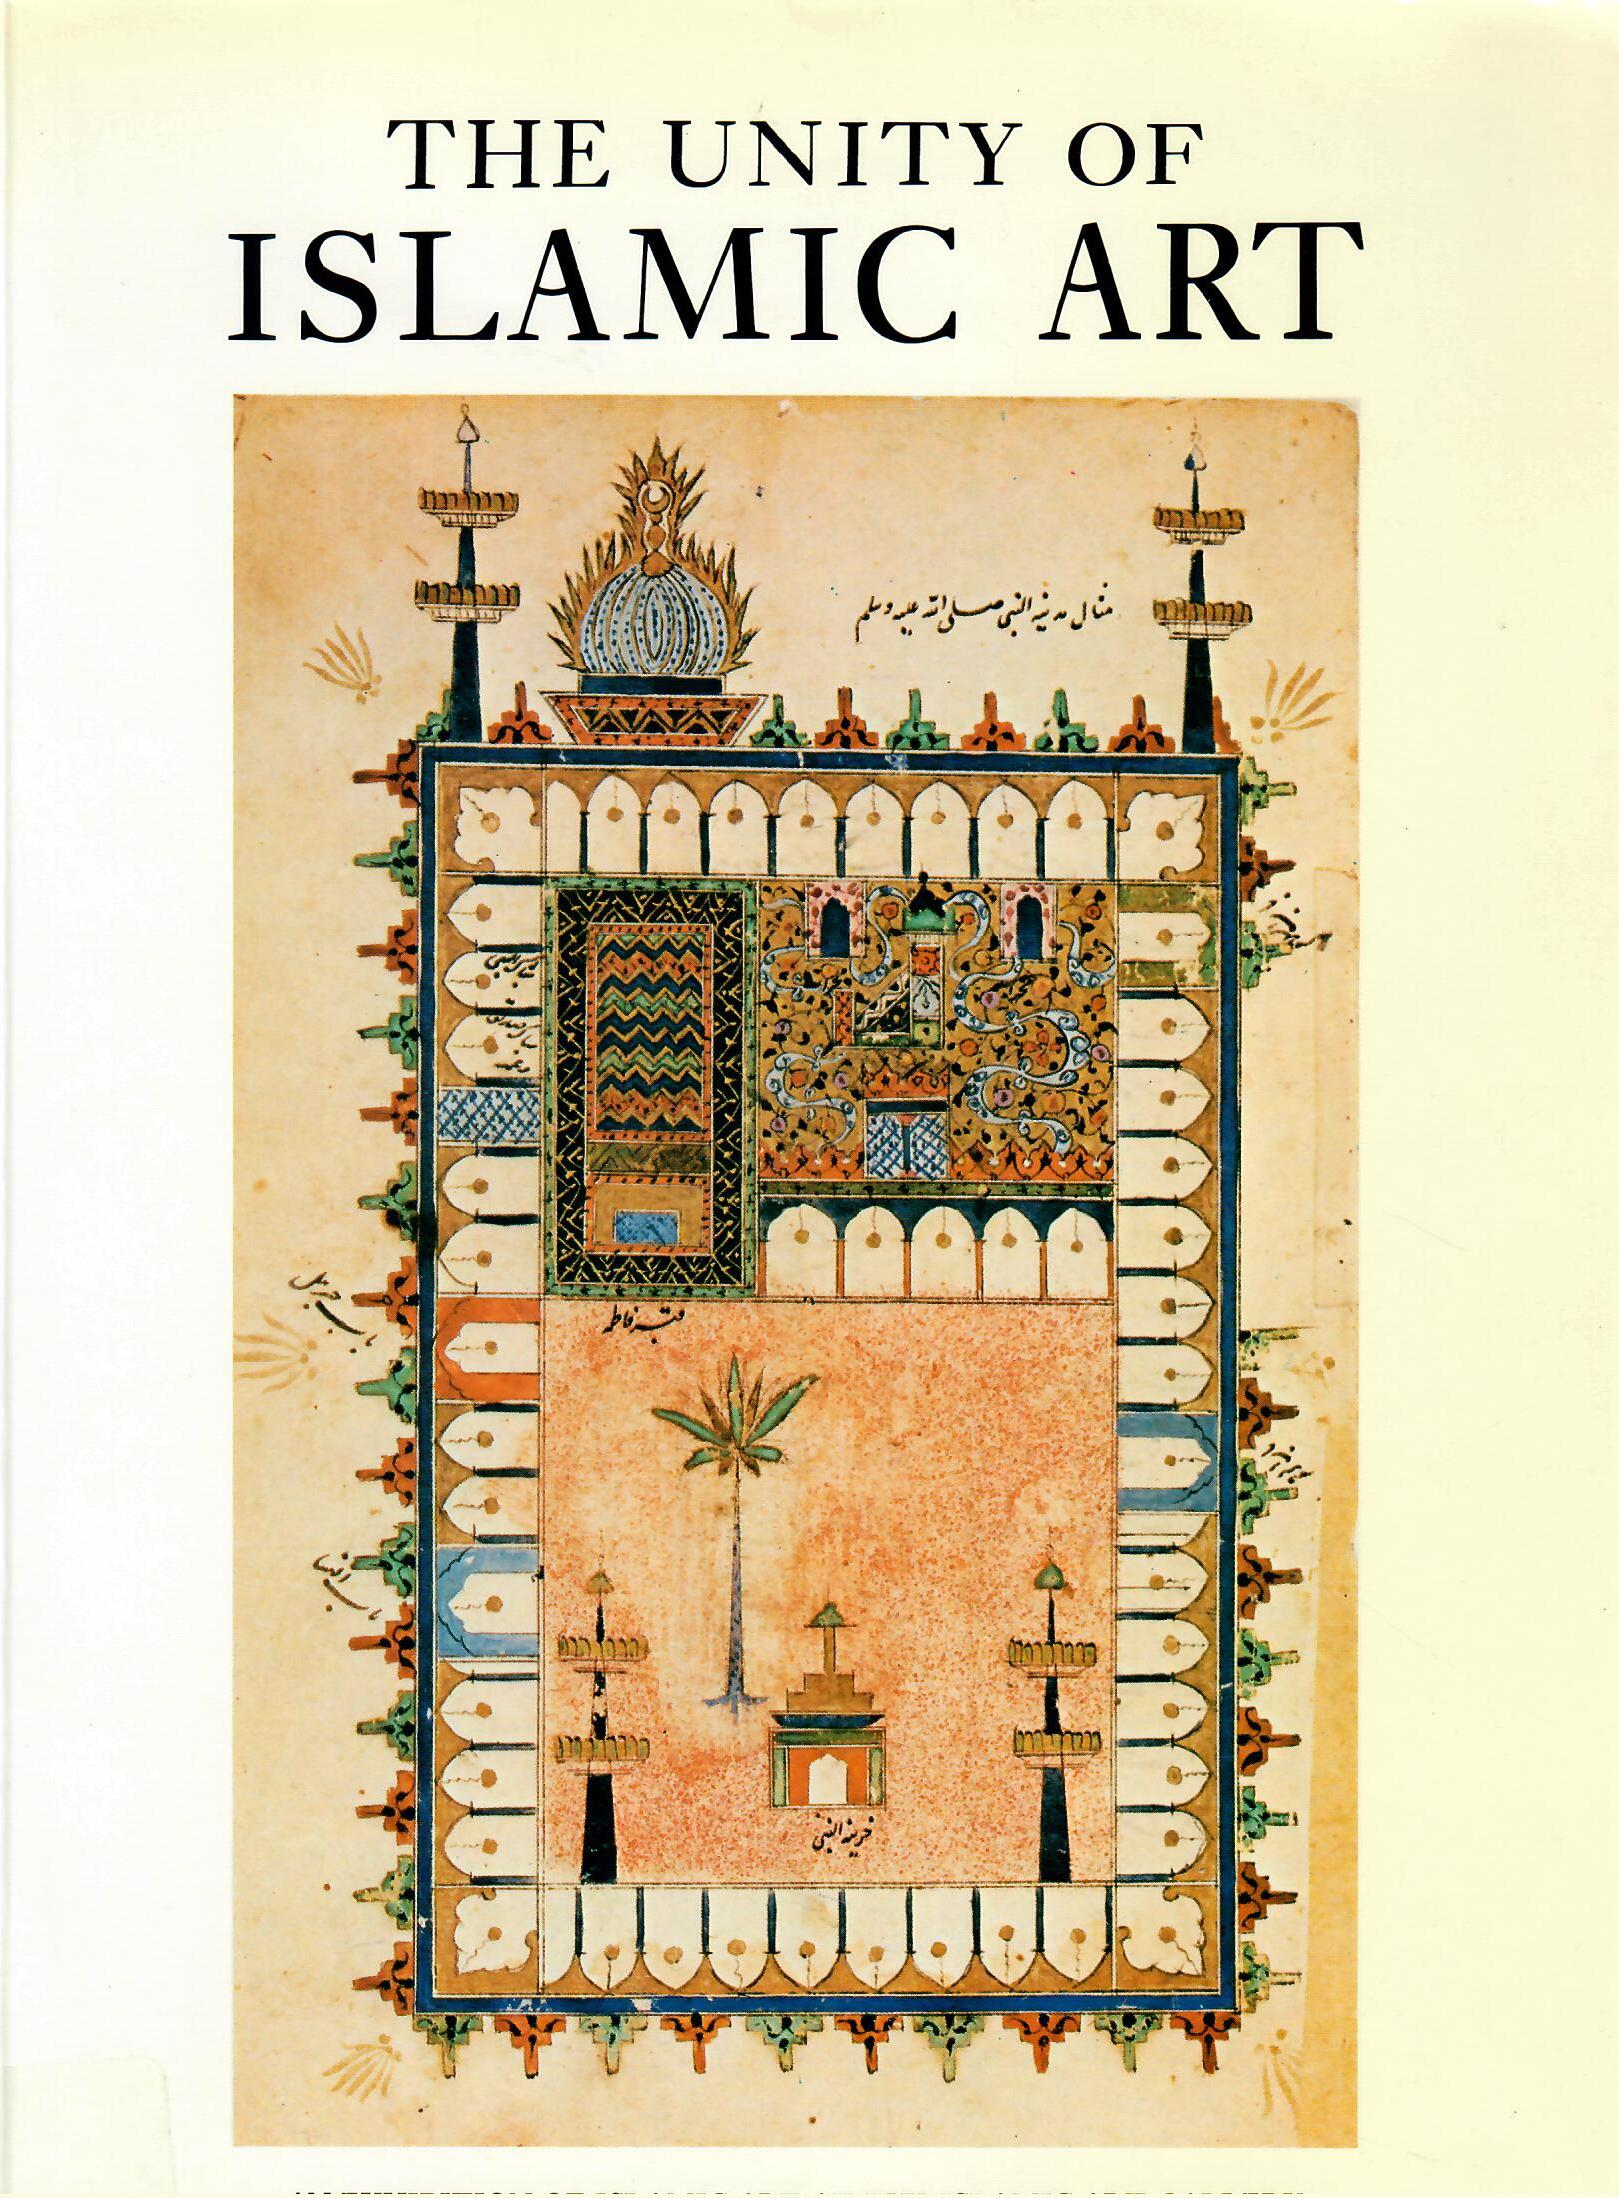 THE UNITY OF ISLAMIC ART